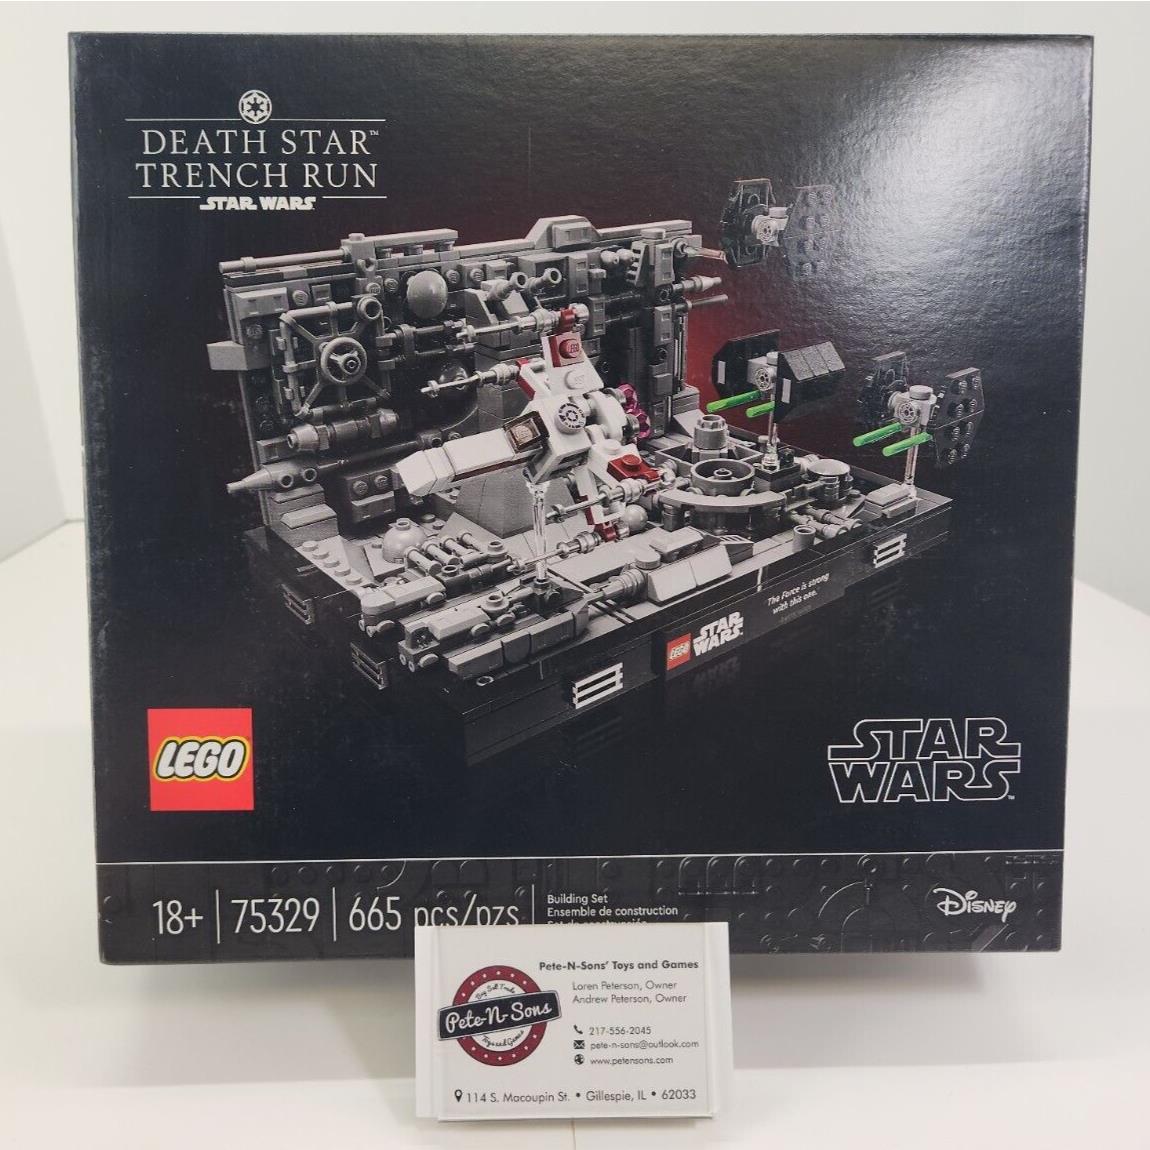 Lego Star Wars: Death Star Trench Run Diorama 75329